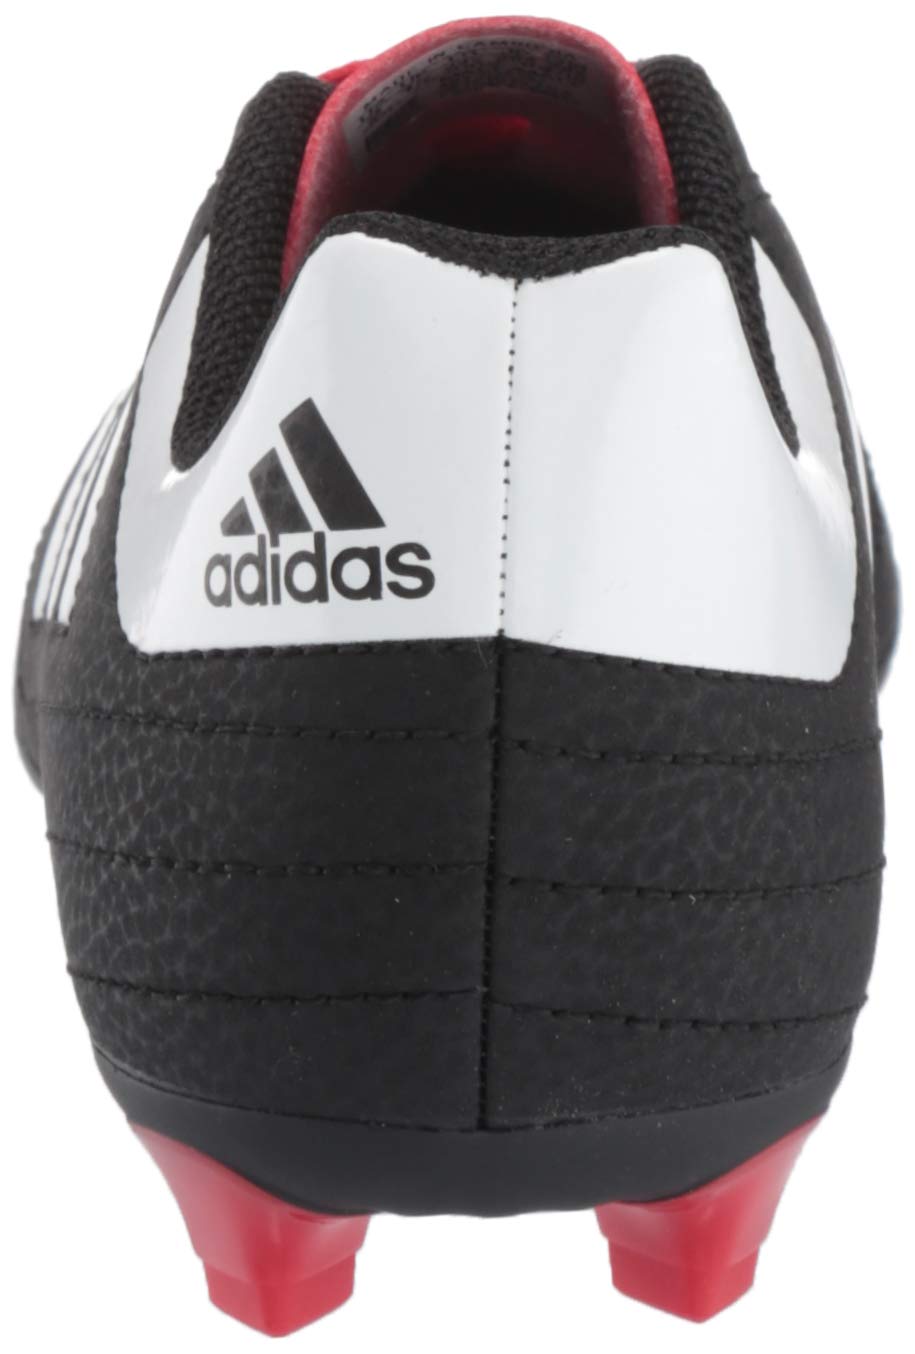 adidas Unisex-Child Goletto Vi Firm Ground Football Shoe